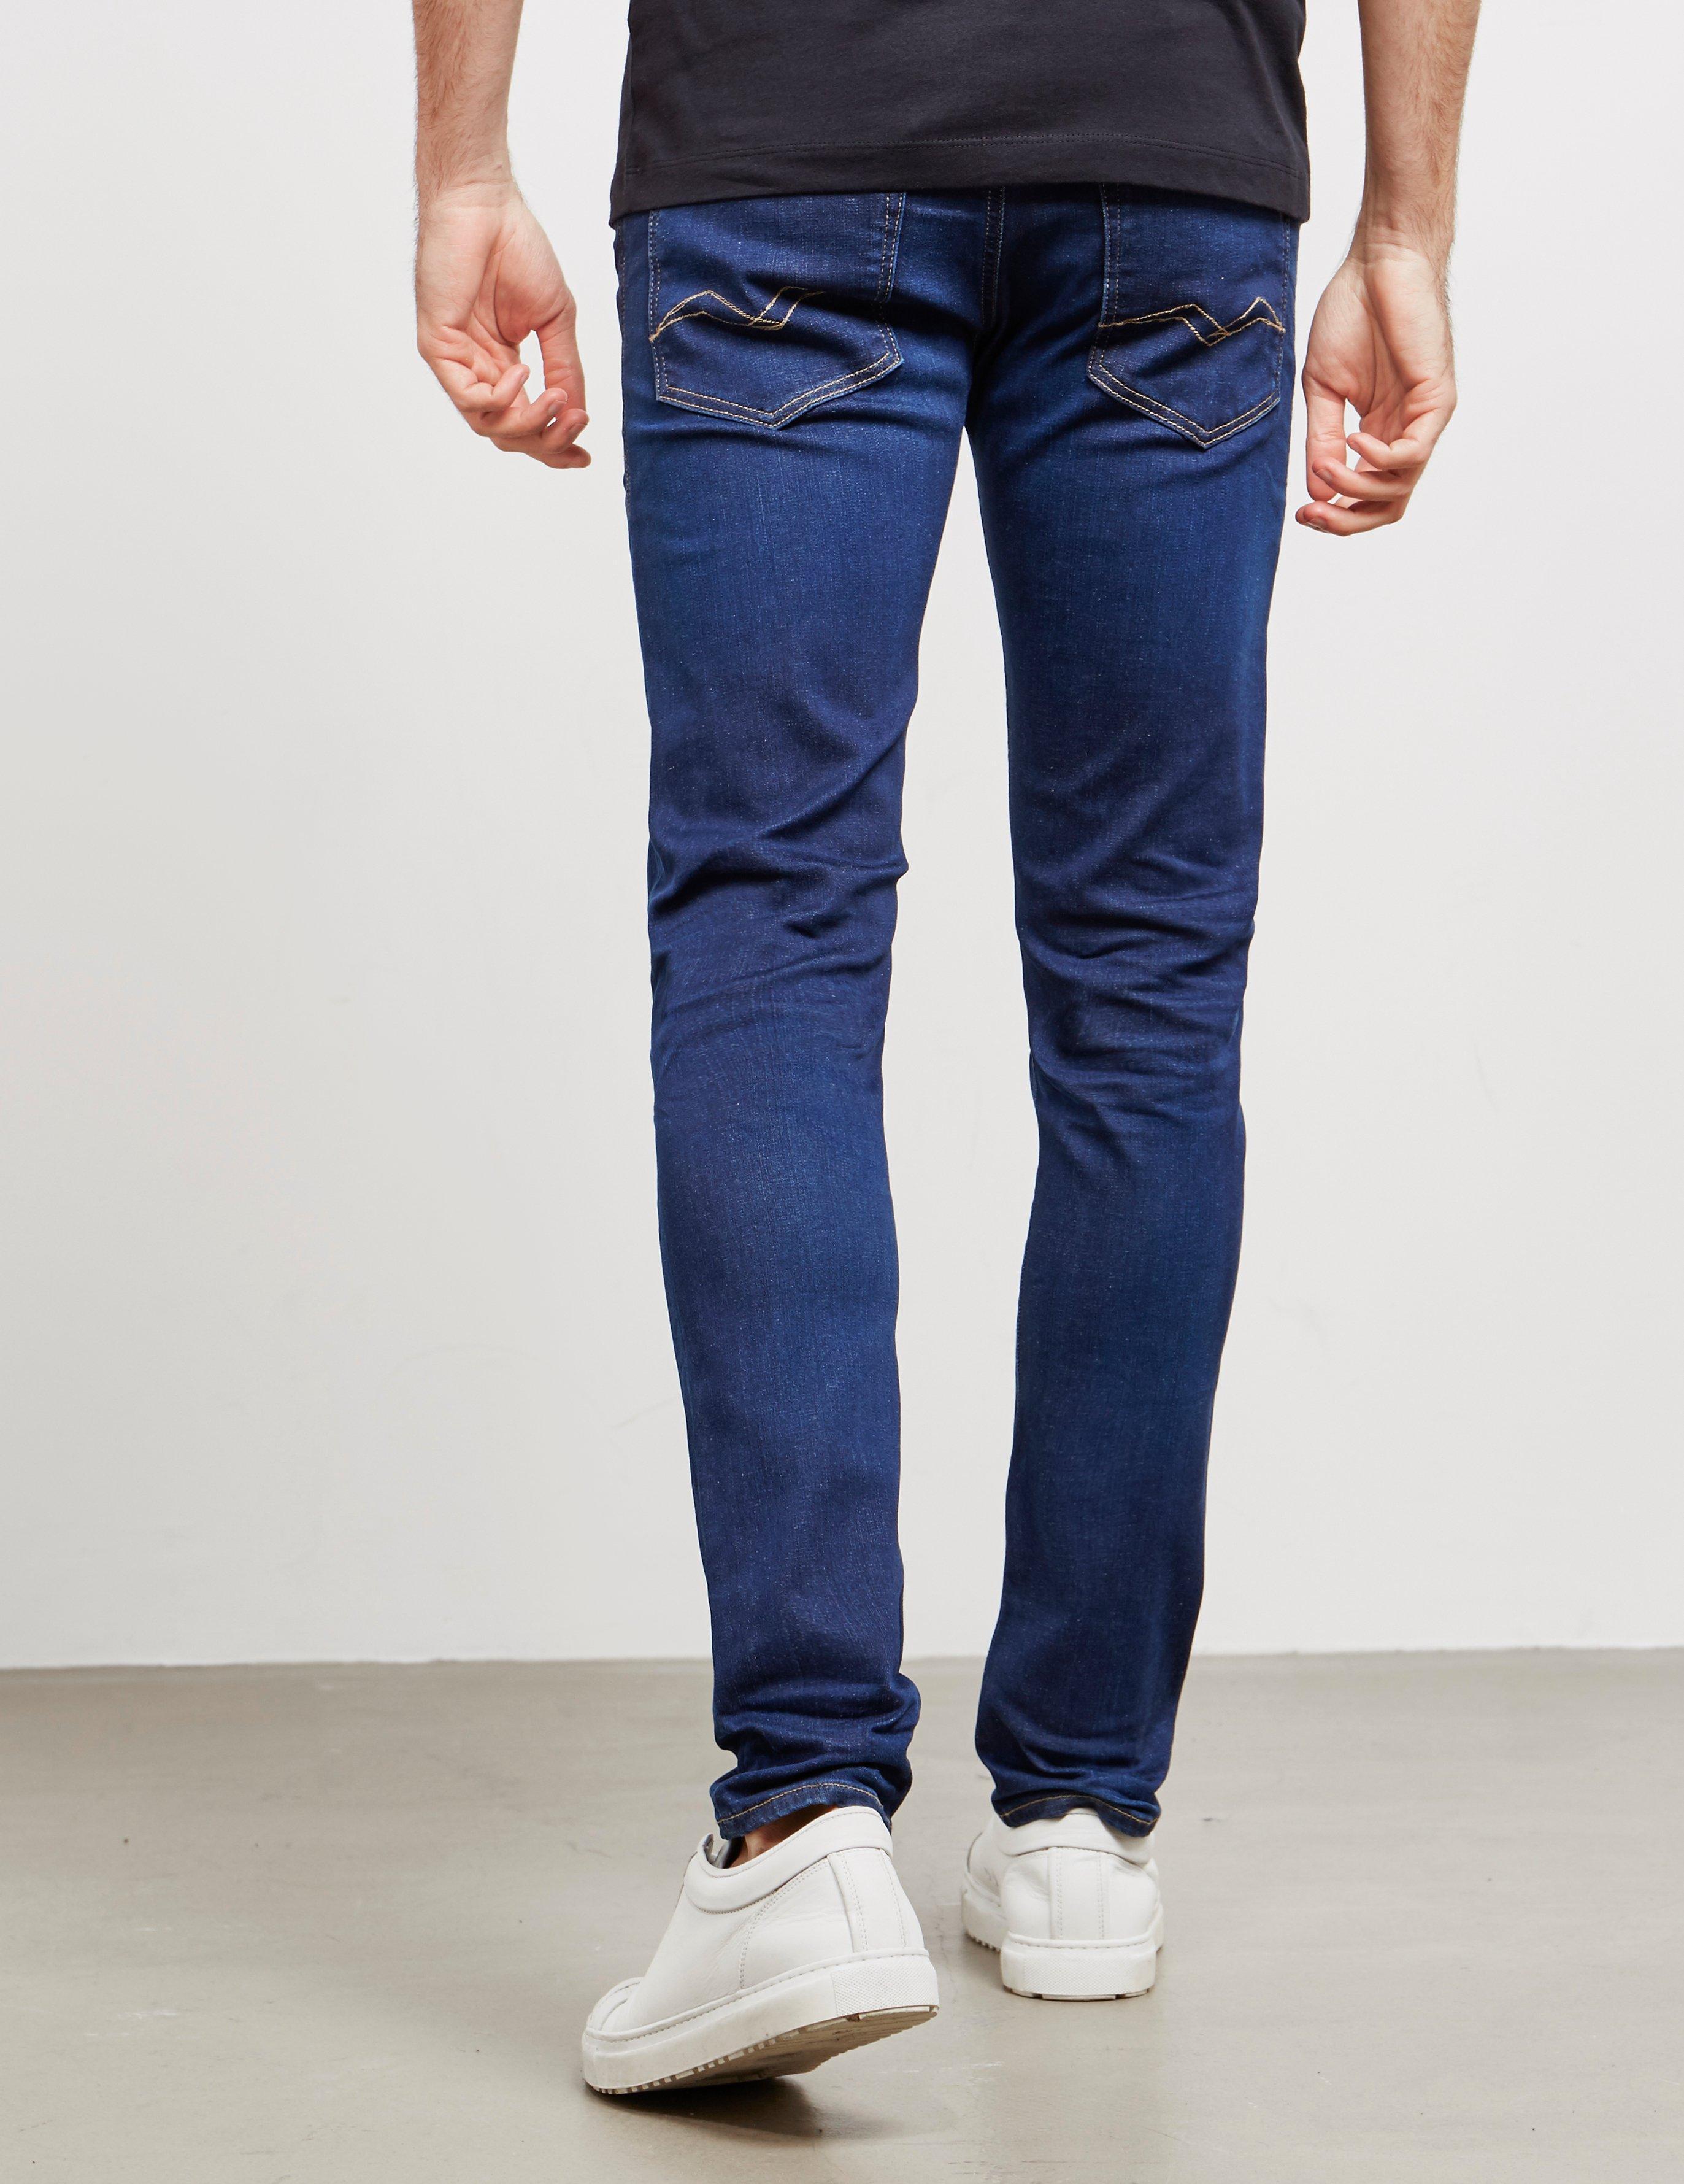 Replay Jondrill Hyperflex Skinny Jeans for Men - Lyst